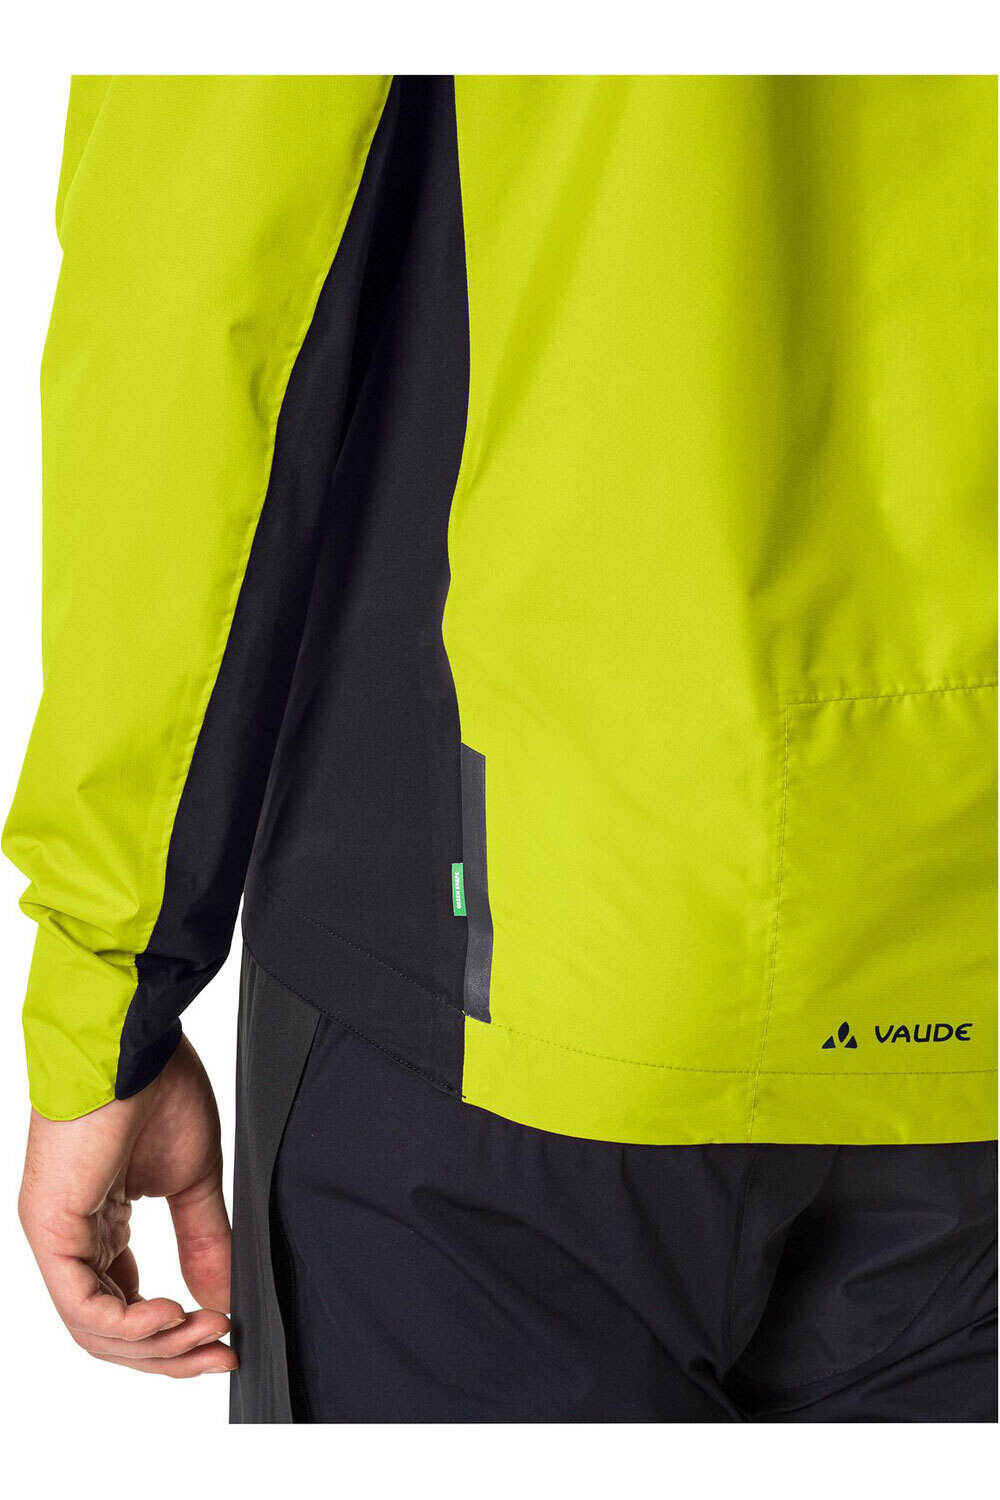 Vaude chaqueta impermeable ciclismo hombre Men's Kuro Rain Jacket 03